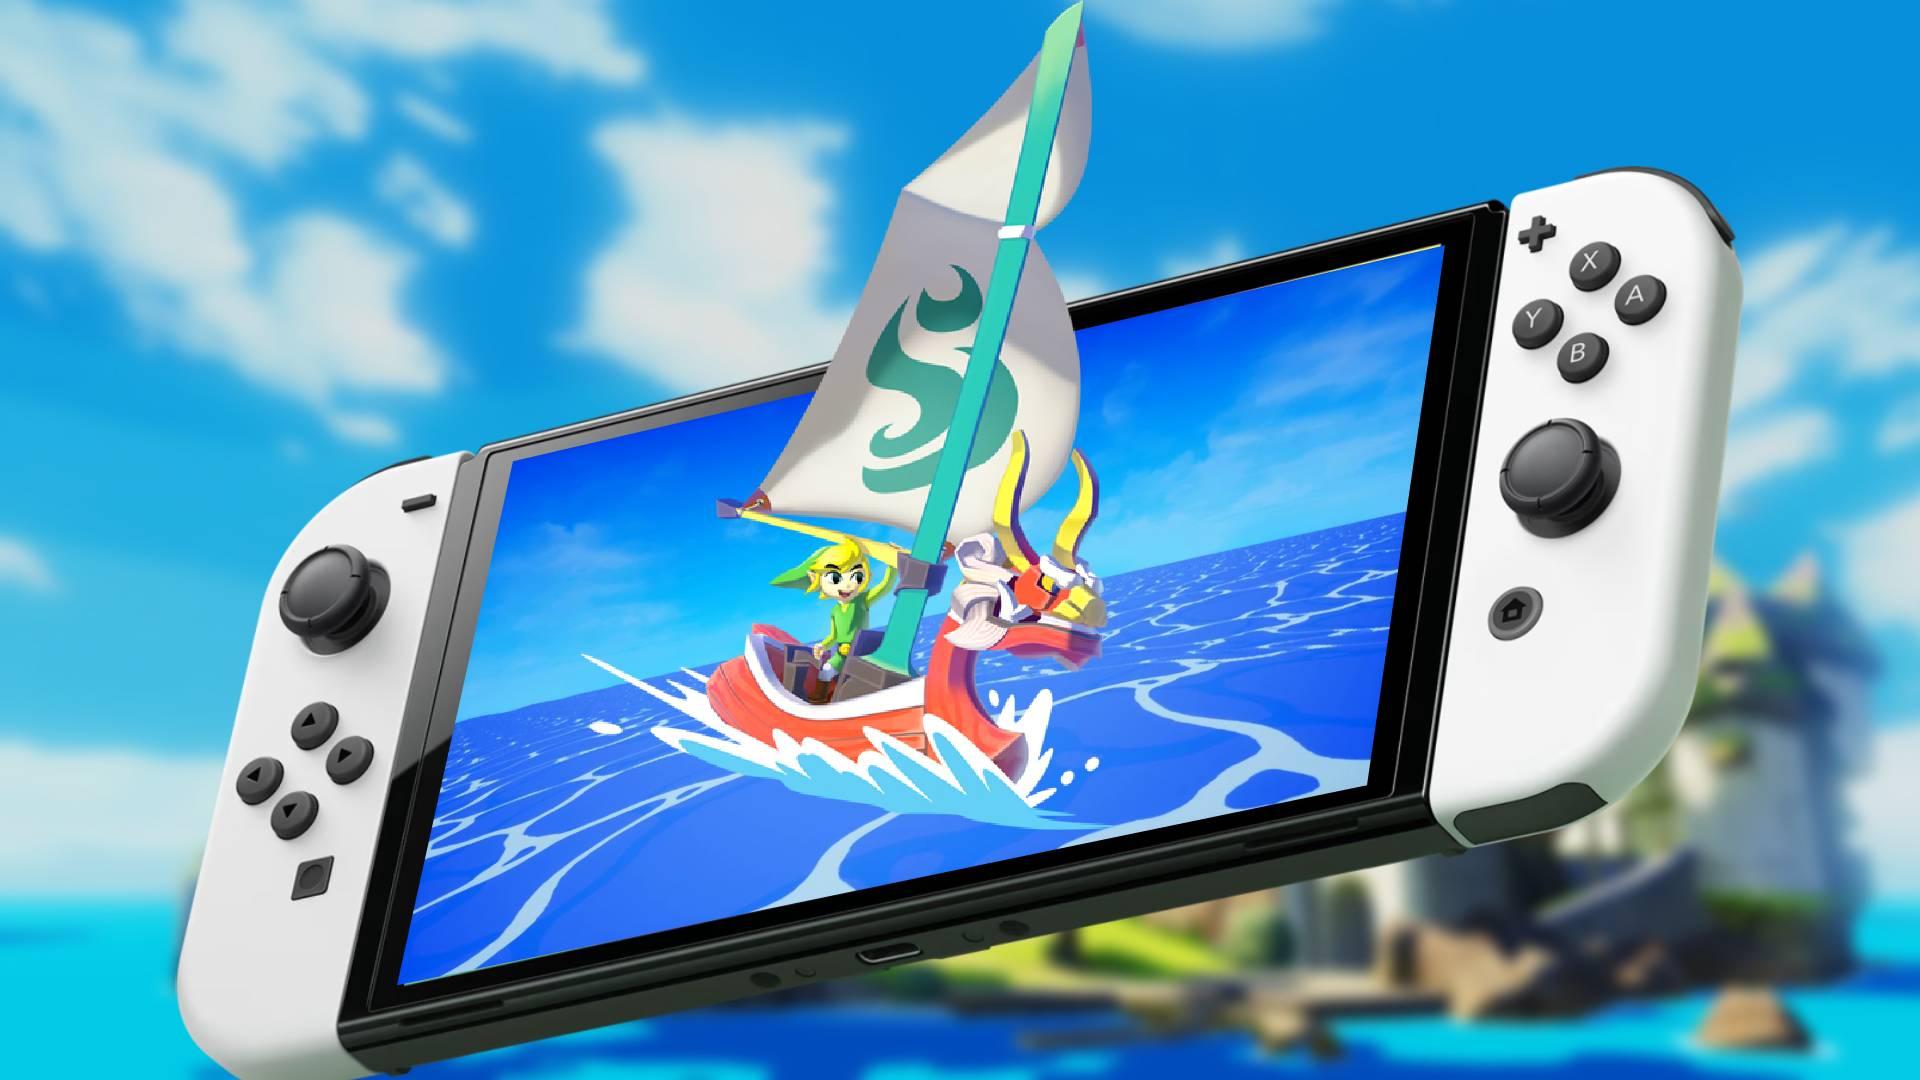 The Wind Waker HD official artwork and screenshots - Zelda Dungeon